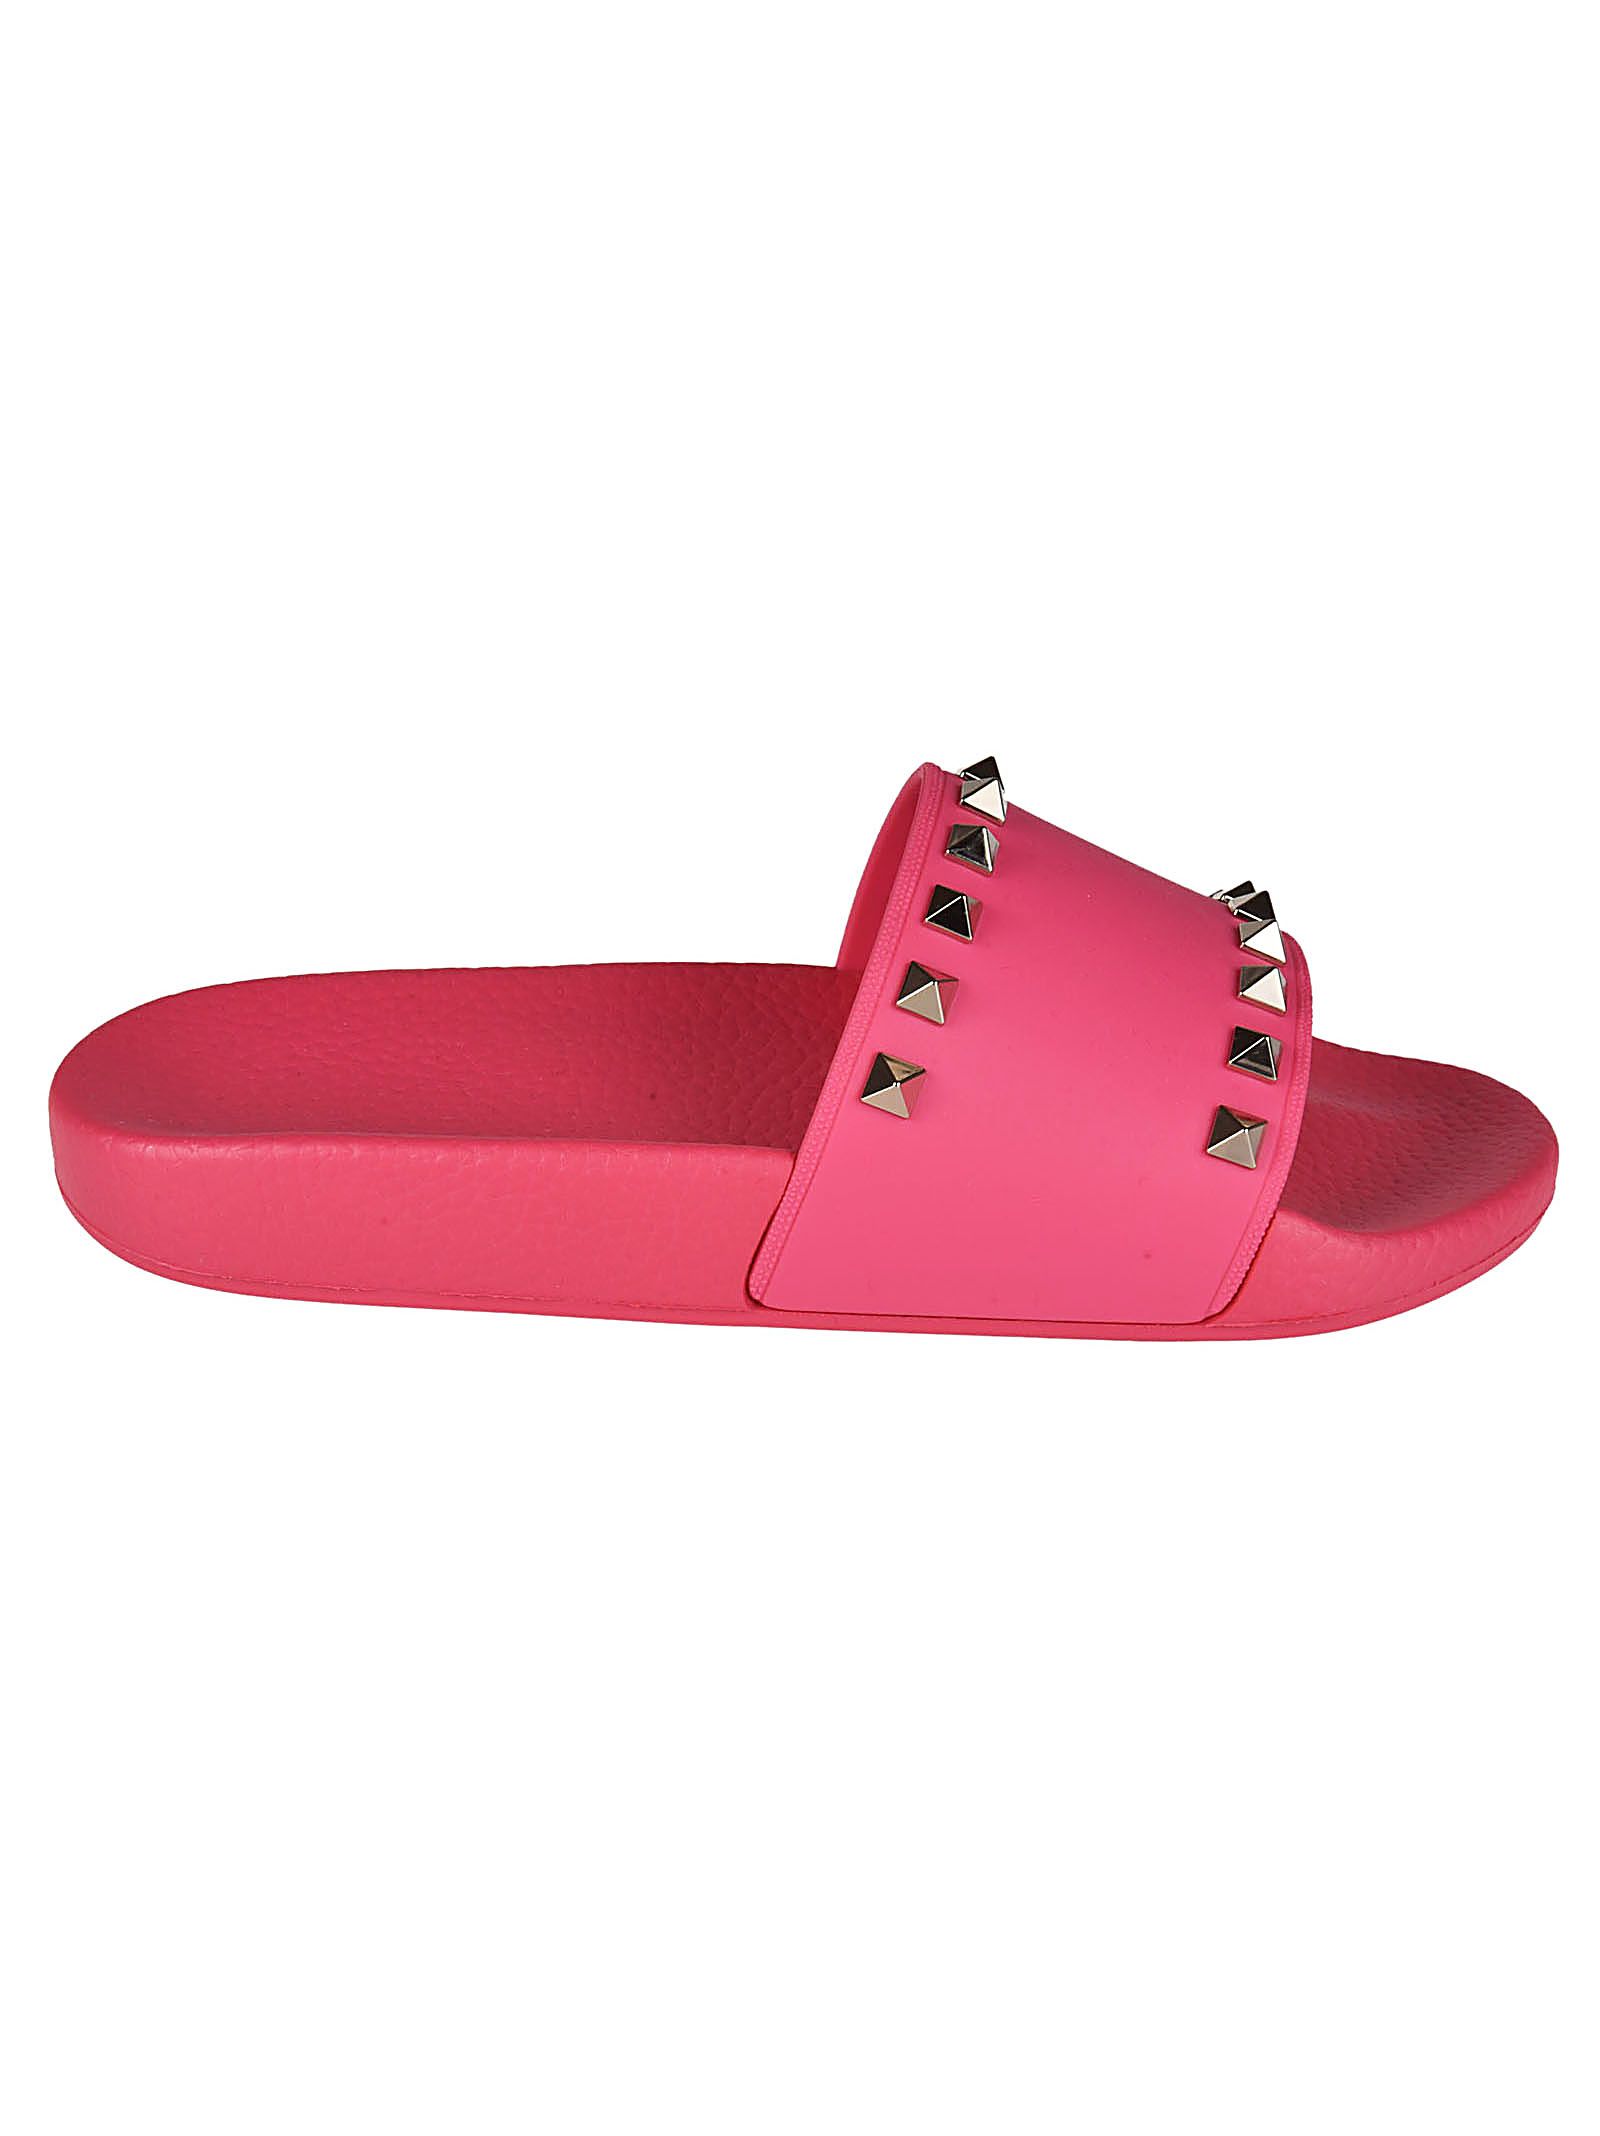 Valentino - Valentino Garavani Rockstud Sliders - Pink, Women's Flat Shoes | Italist